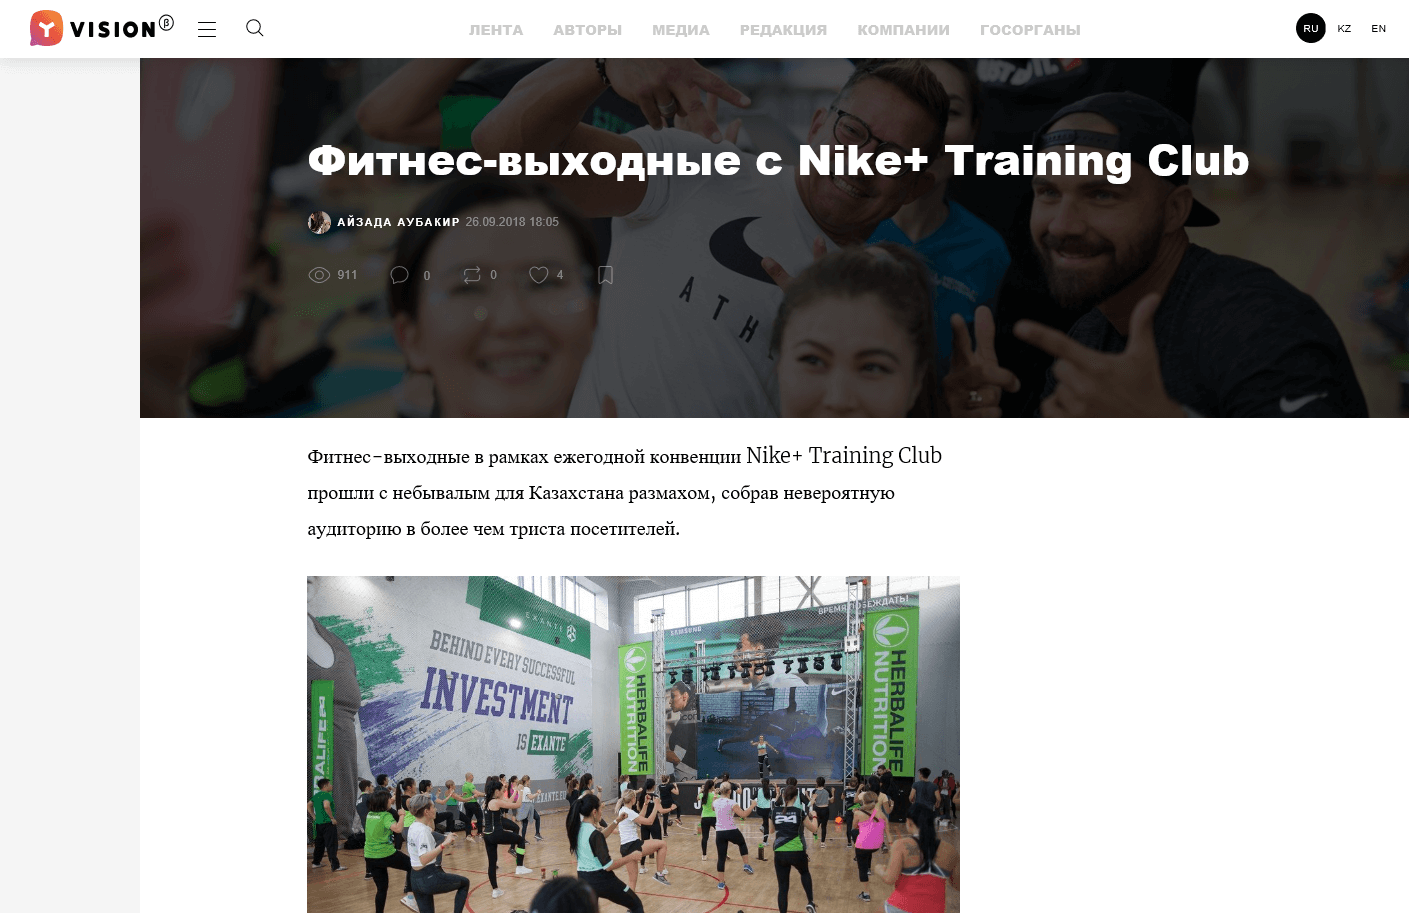 nike+ training club convention  (отчет о мероприятии) 